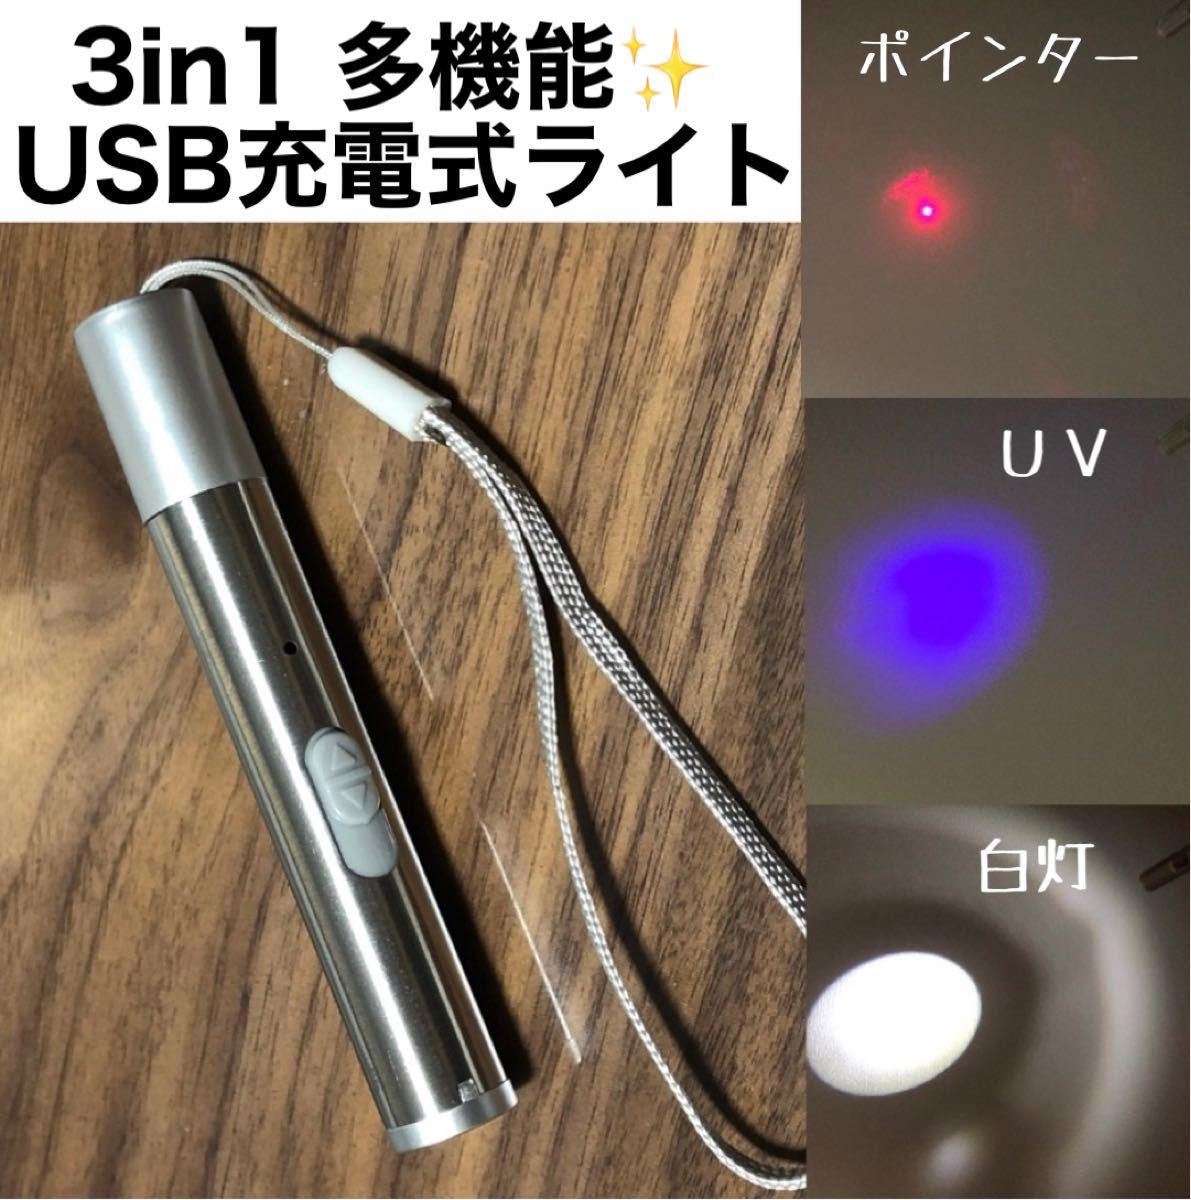 USB充電式ミニフラッシュライト3in1